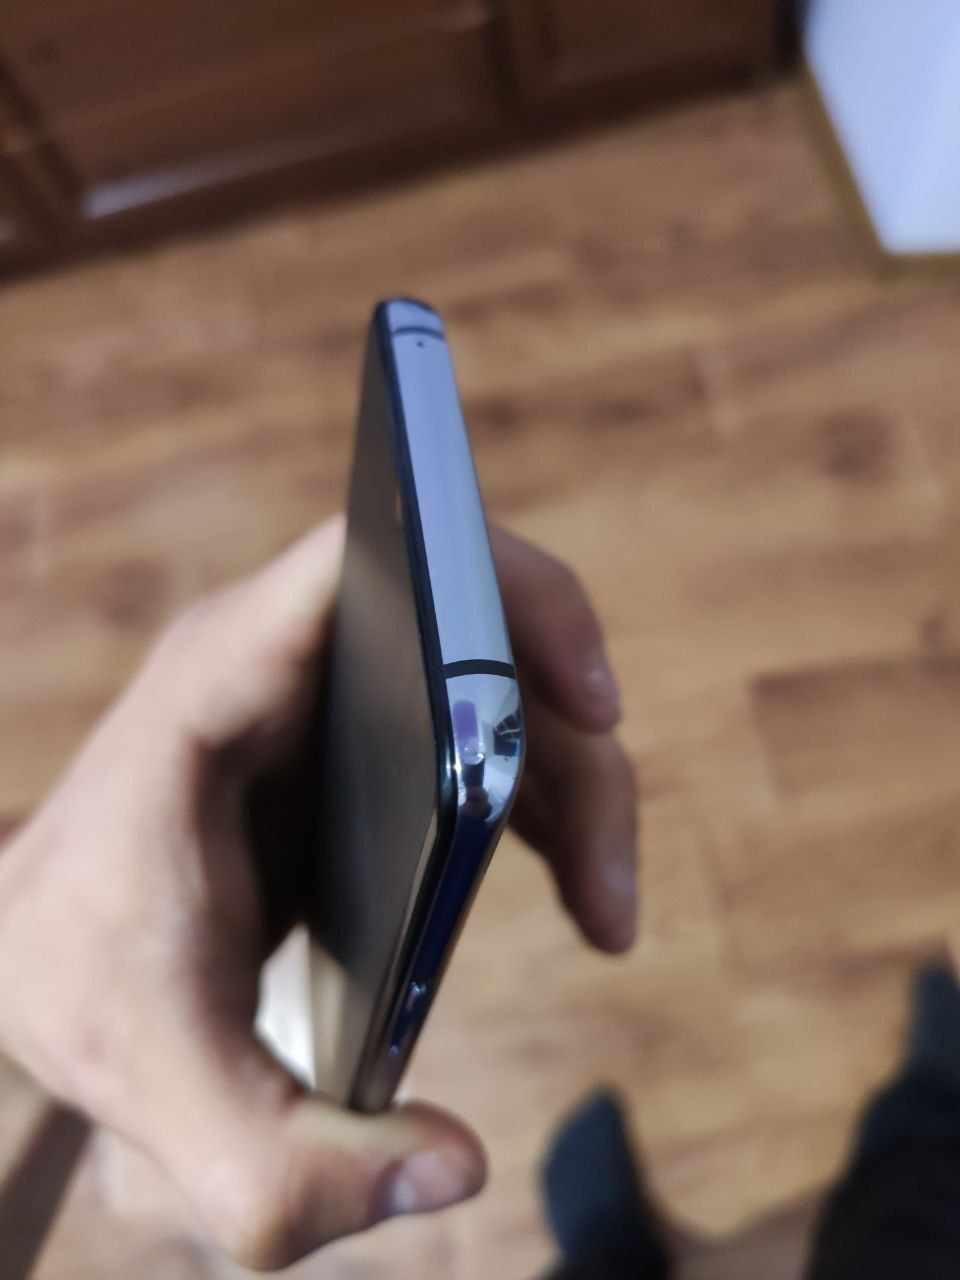 OnePlus 7T 8/128 срочно